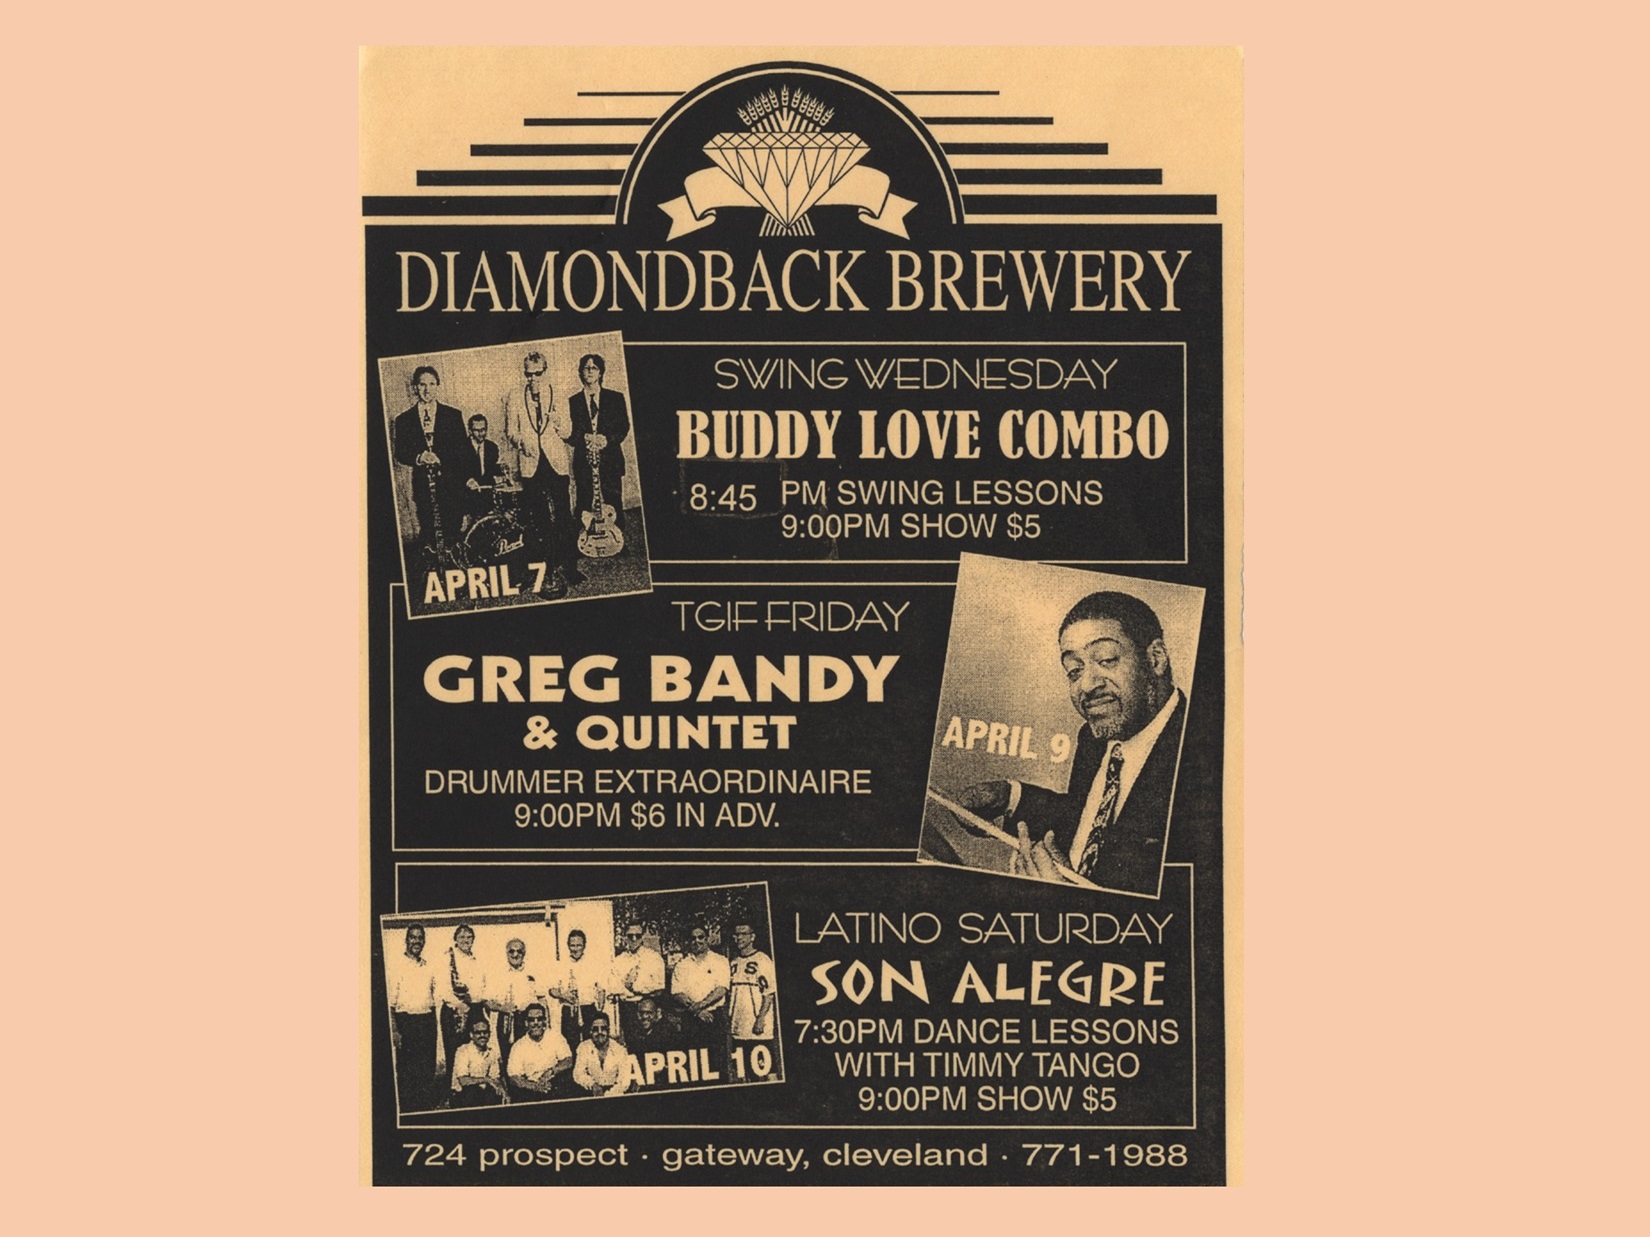 Buddy Love Combo at Diamondback Brewery in 1999